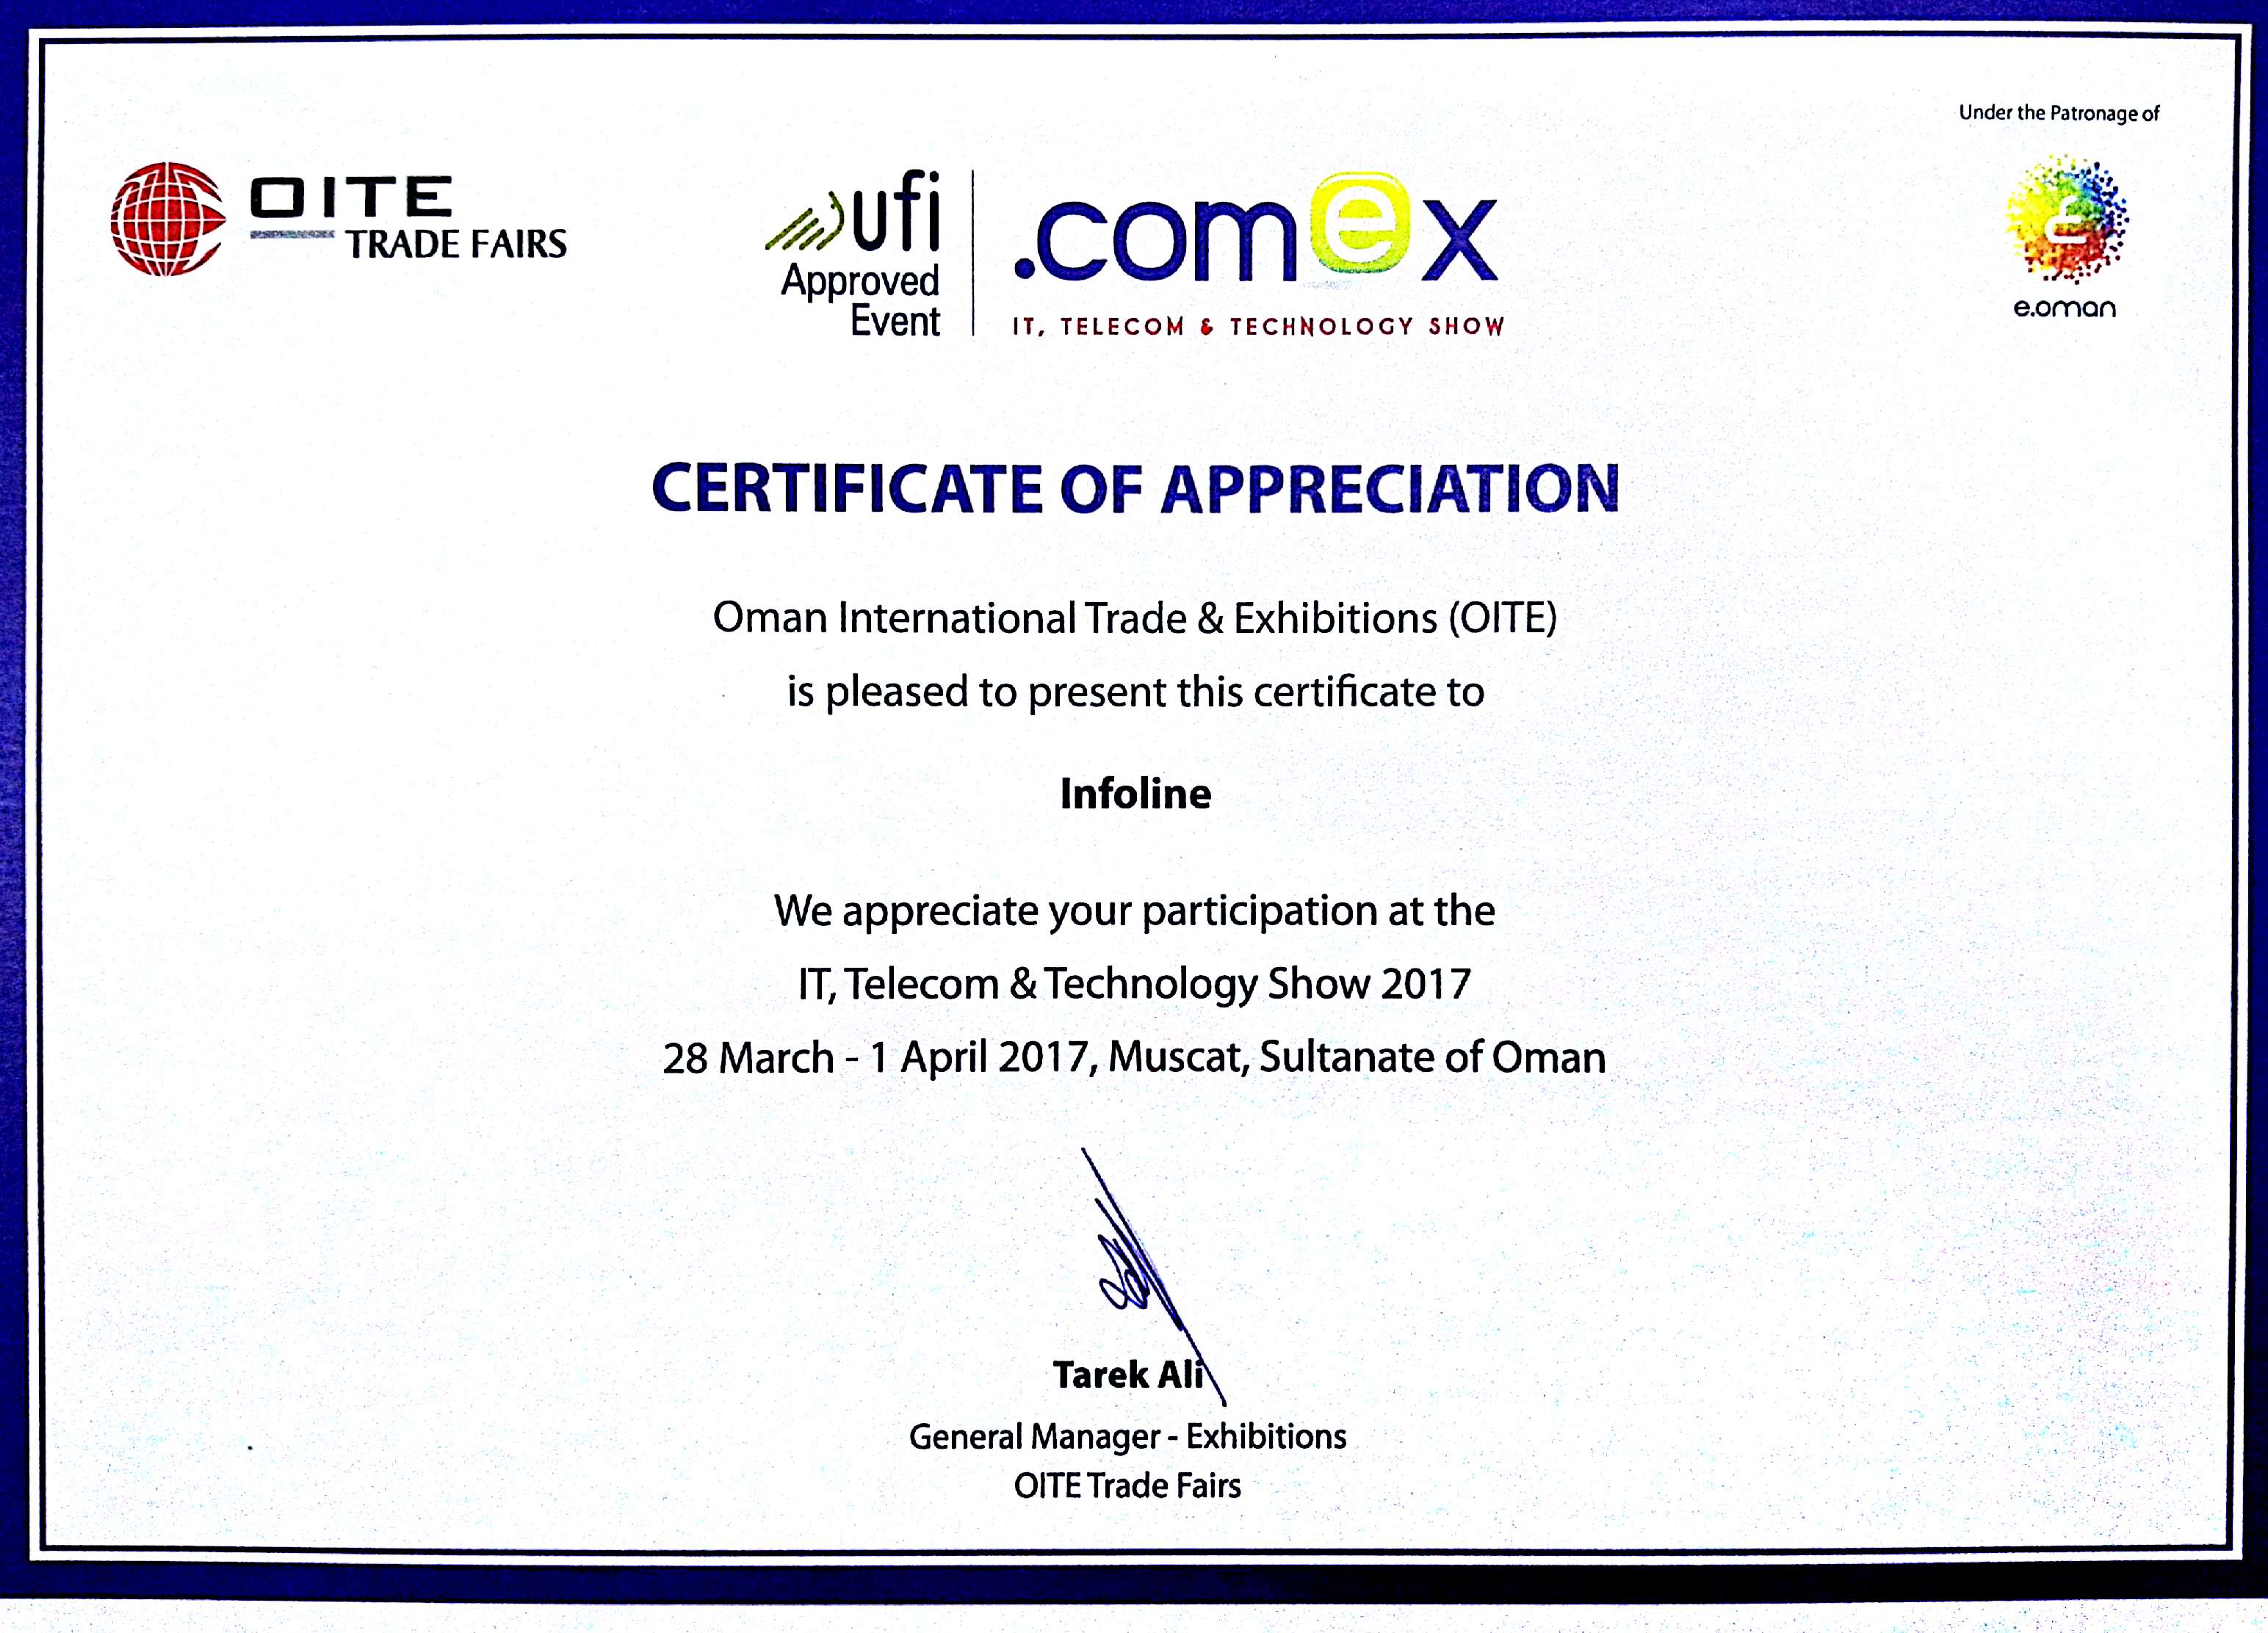 Infoline participates in Comex 2017